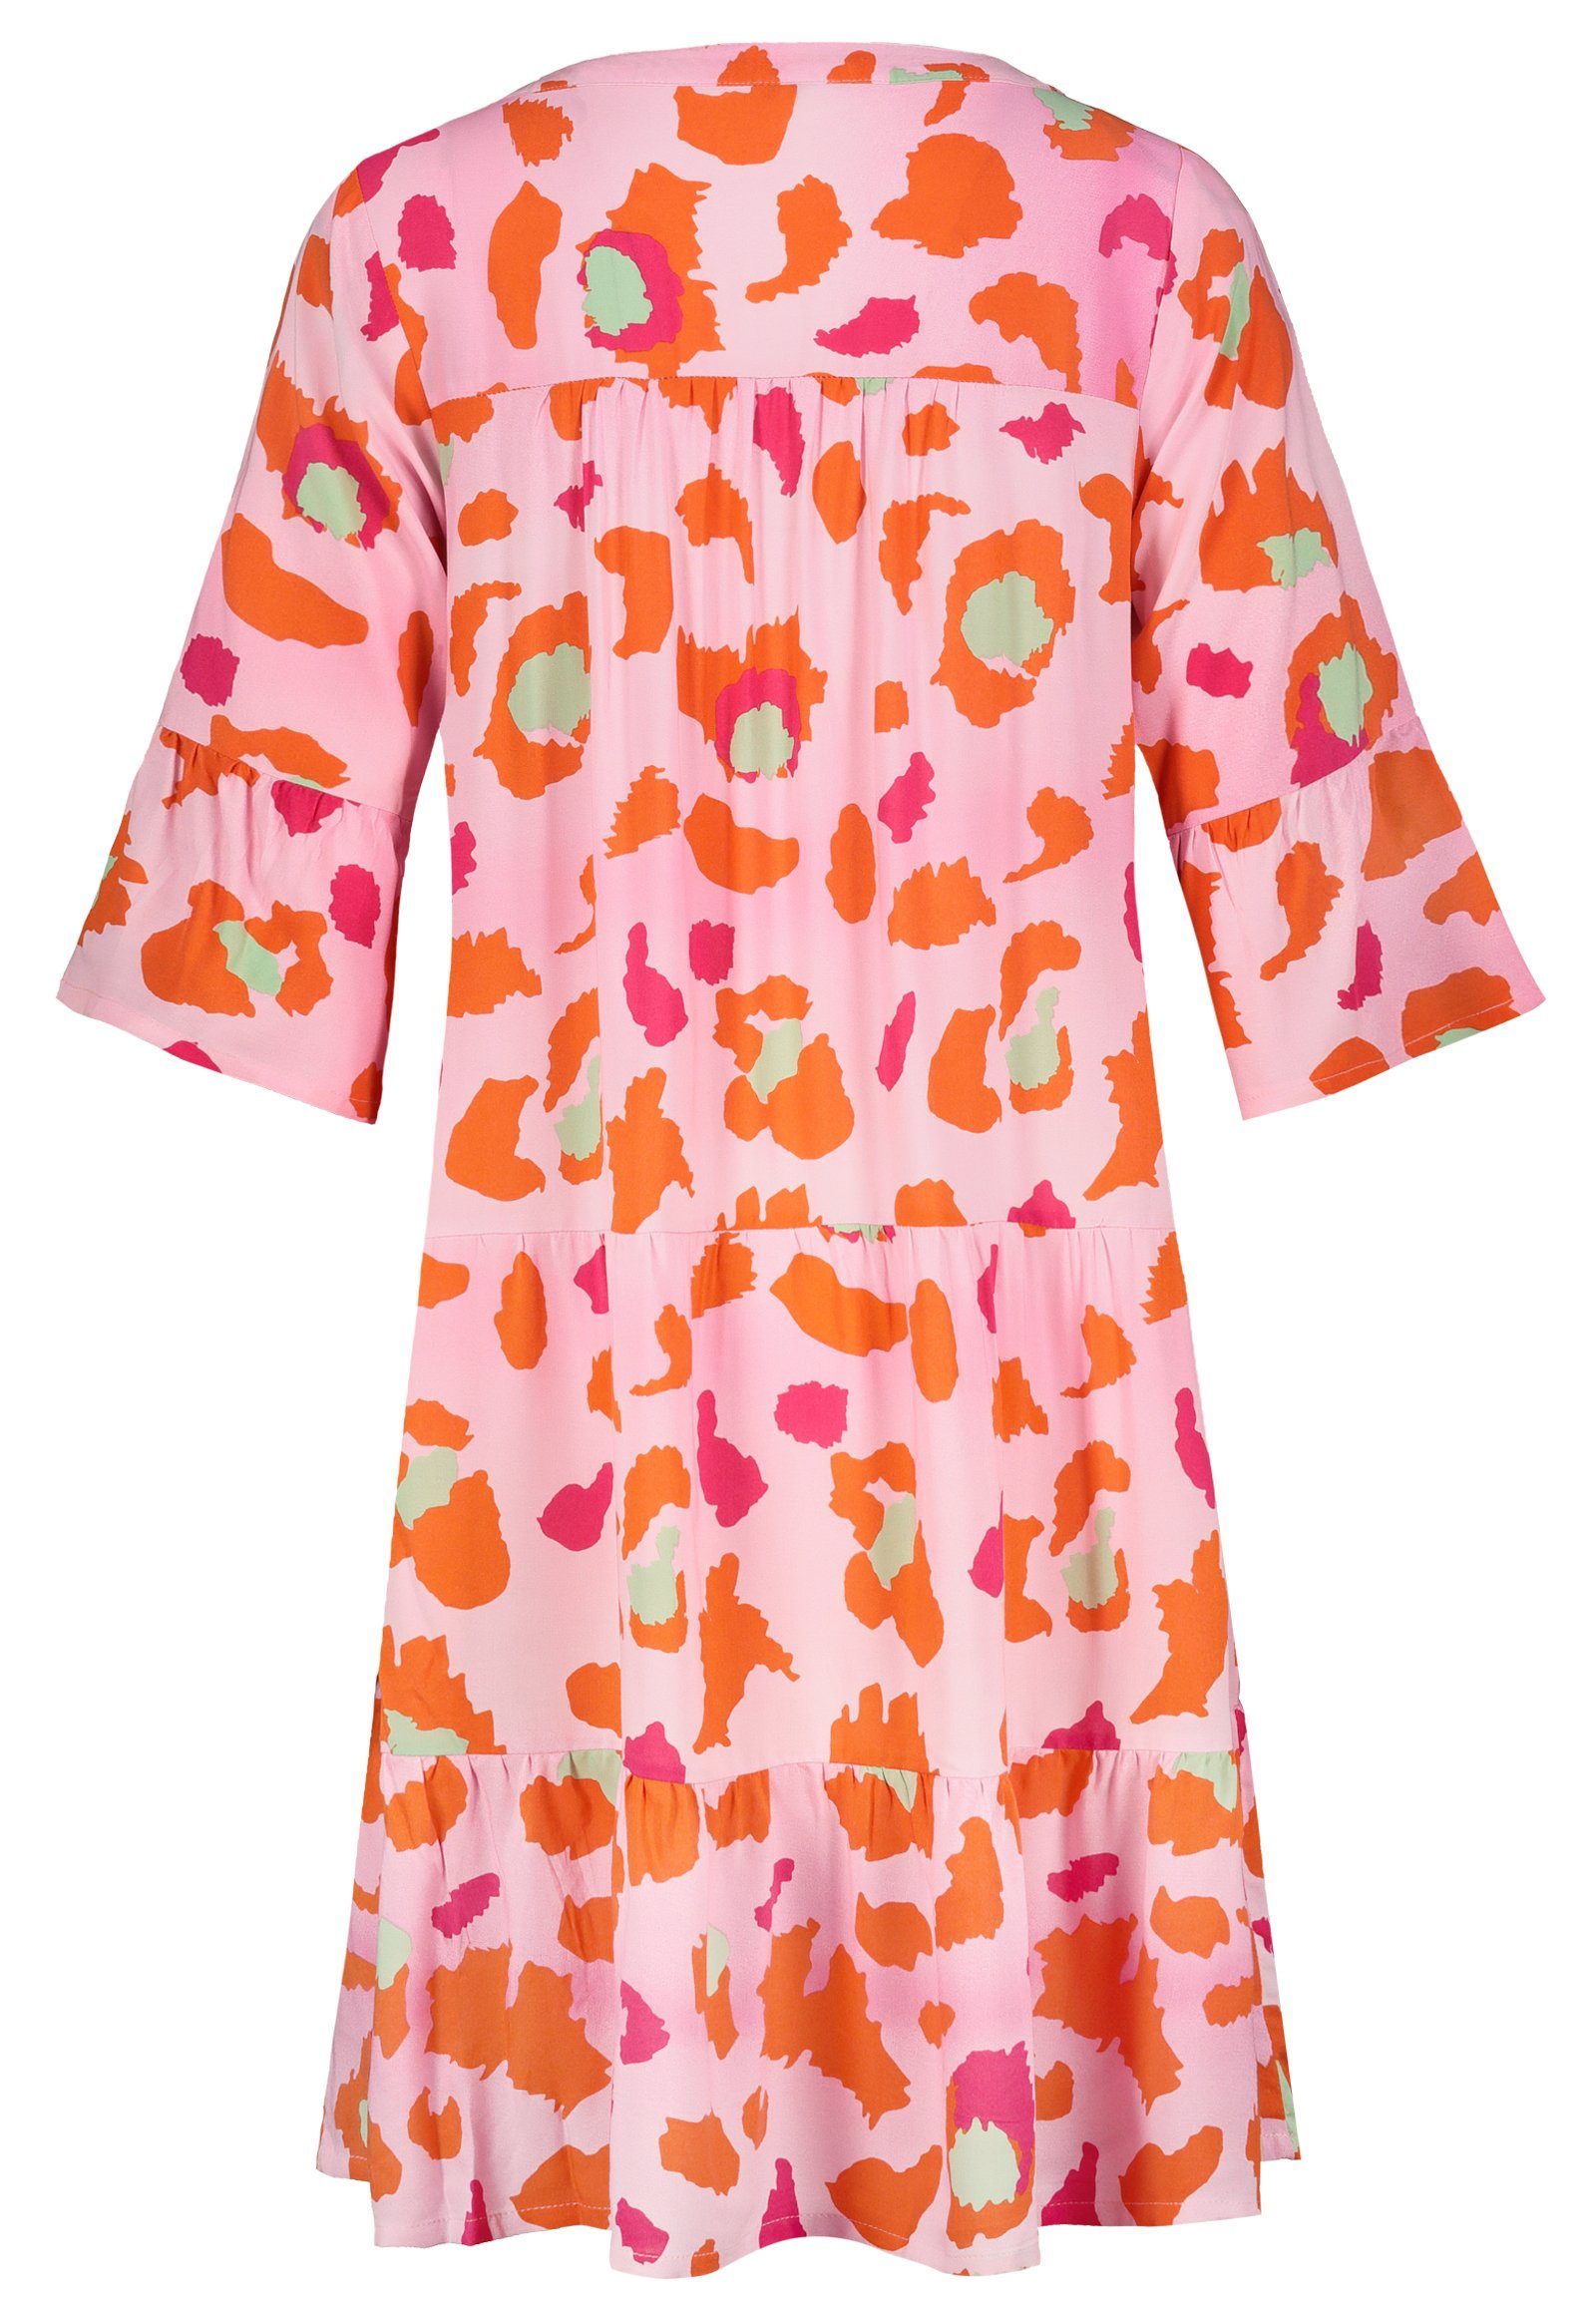 SUBLEVEL MIT 100% pink 01 Sublevel Kleid Strandkleid design middle Sommerkleid Strandkleid VOLANTS Viskose Damen